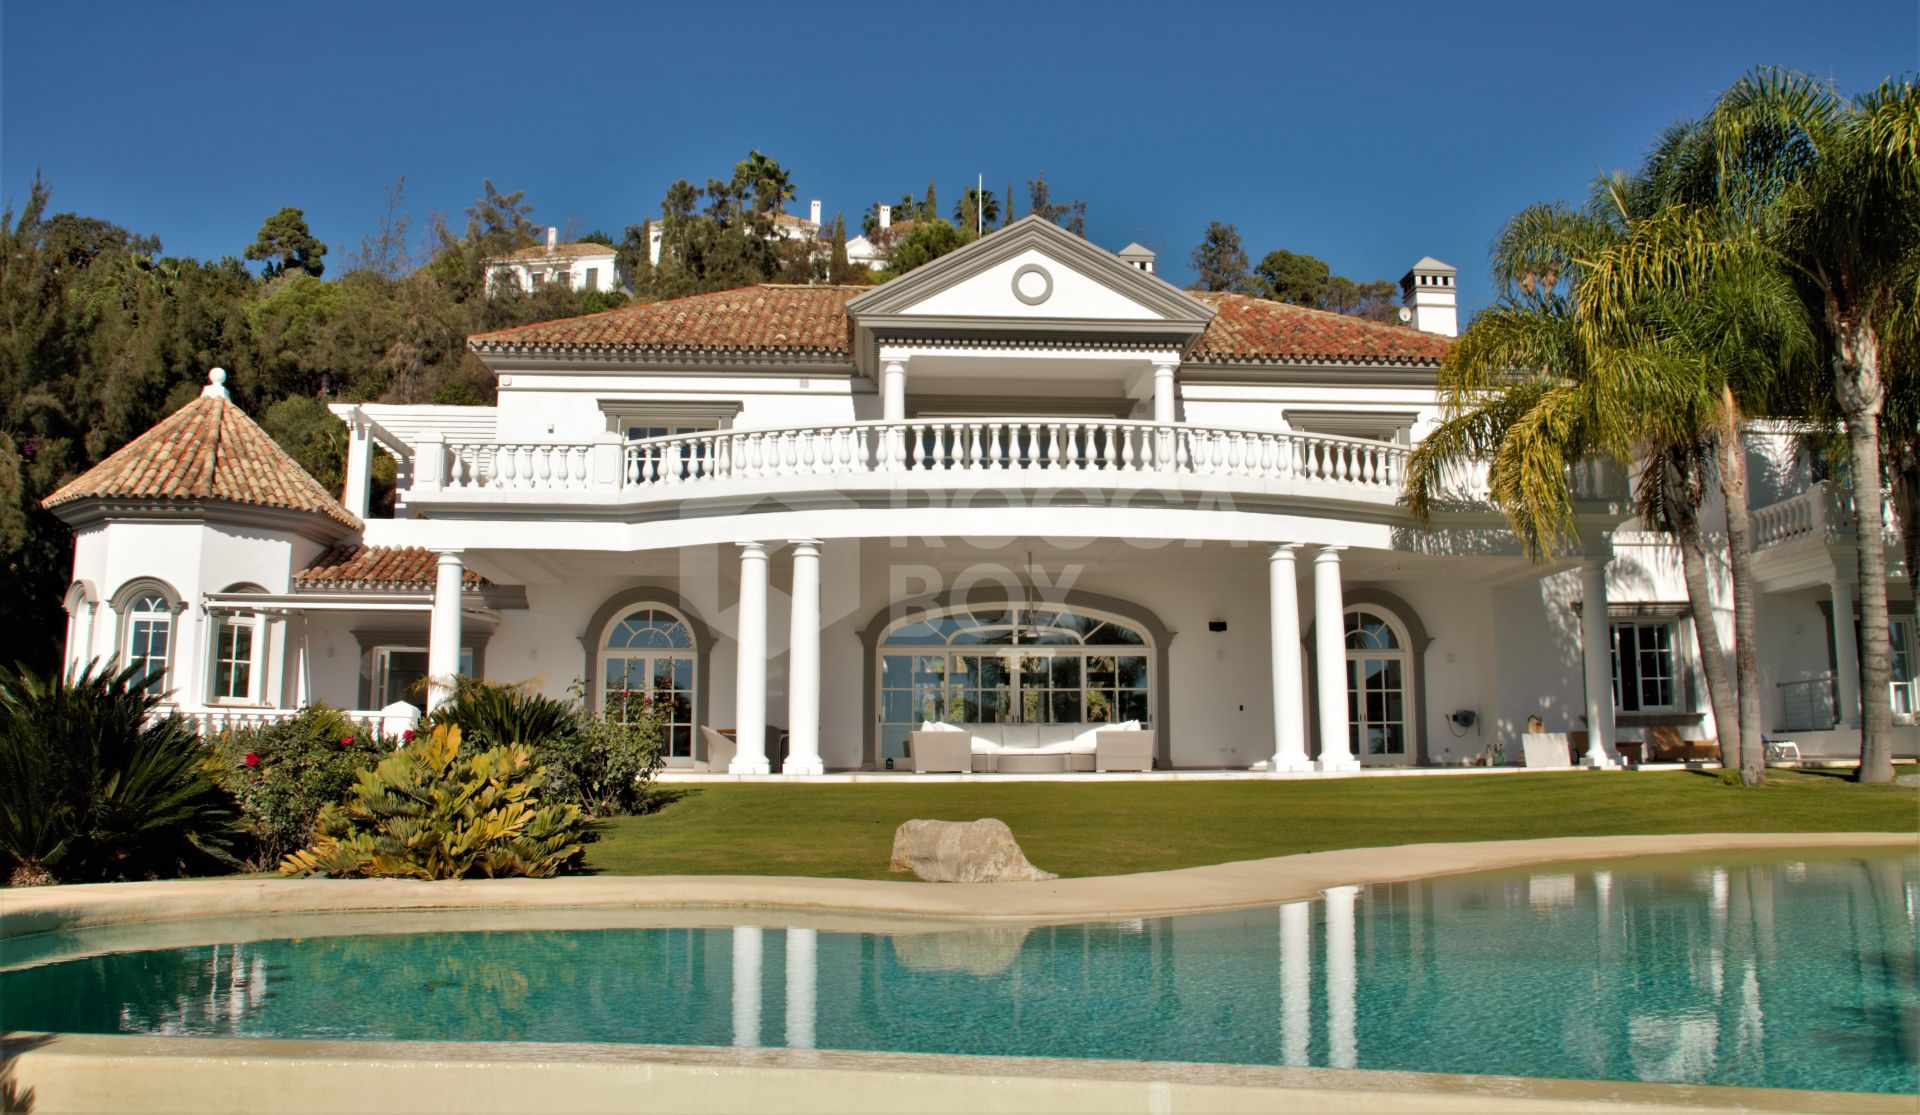 Exquisite La Zagaleta Villa in Benahavís with Sea Views and Luxury Amenities